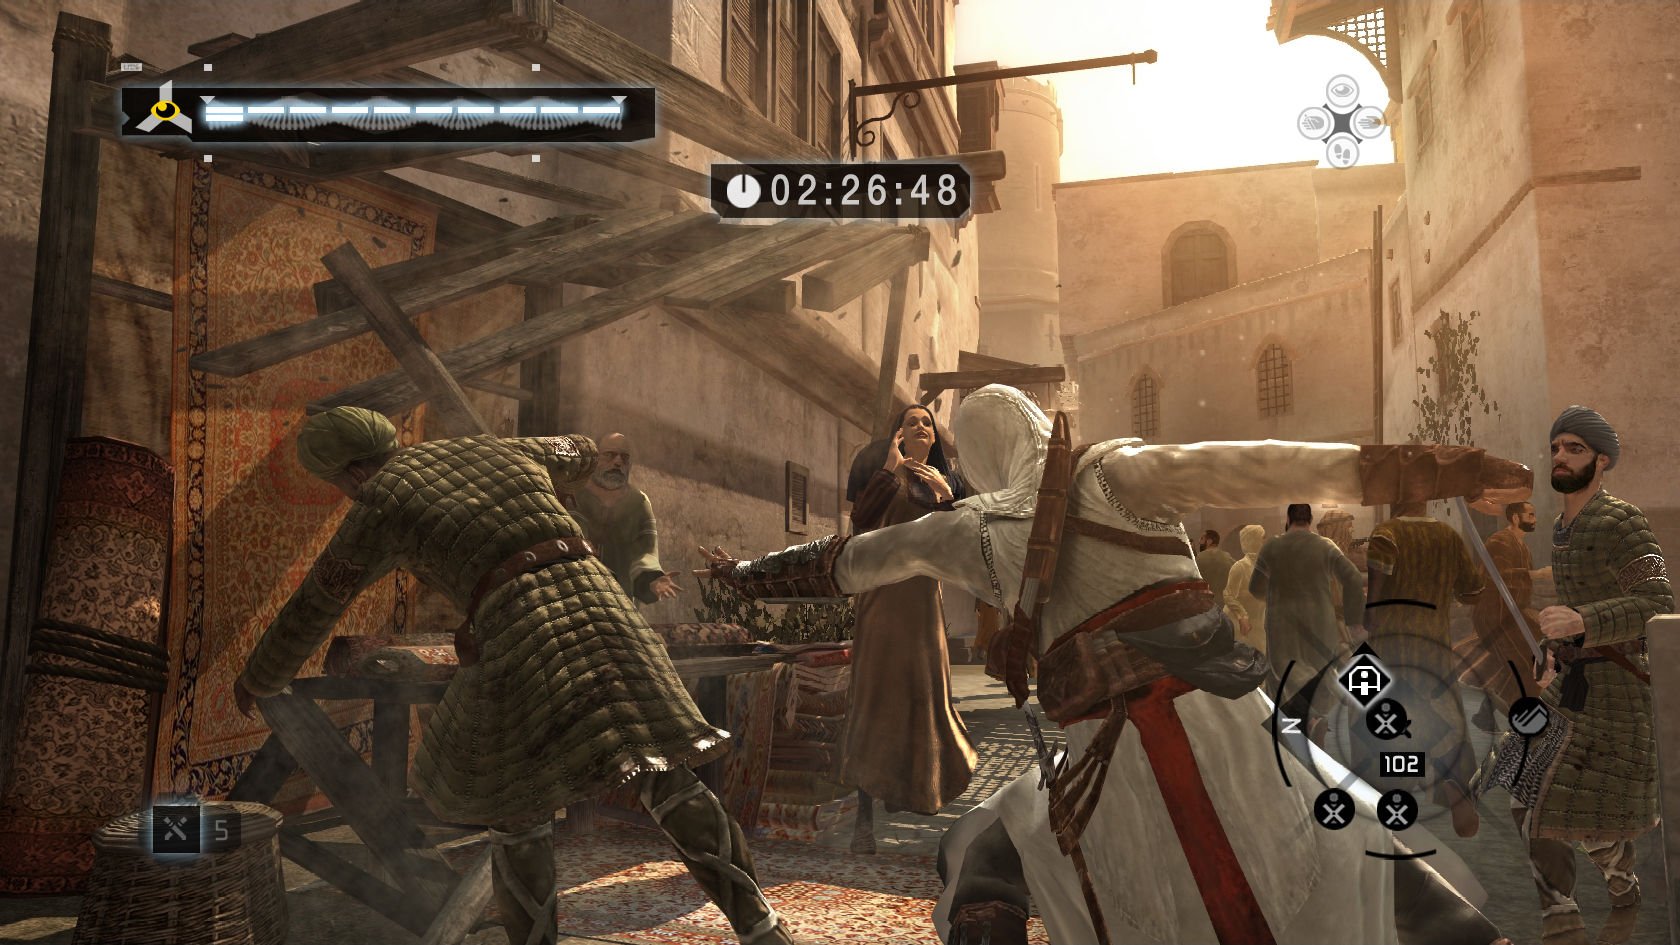 Ассасины игра видео. Assassin's Creed 1 Скриншоты. Assassin's Creed 1 ps3 screenshot. Ассассинс Крид первая игра. Assassins Creed 2007 Скриншоты.